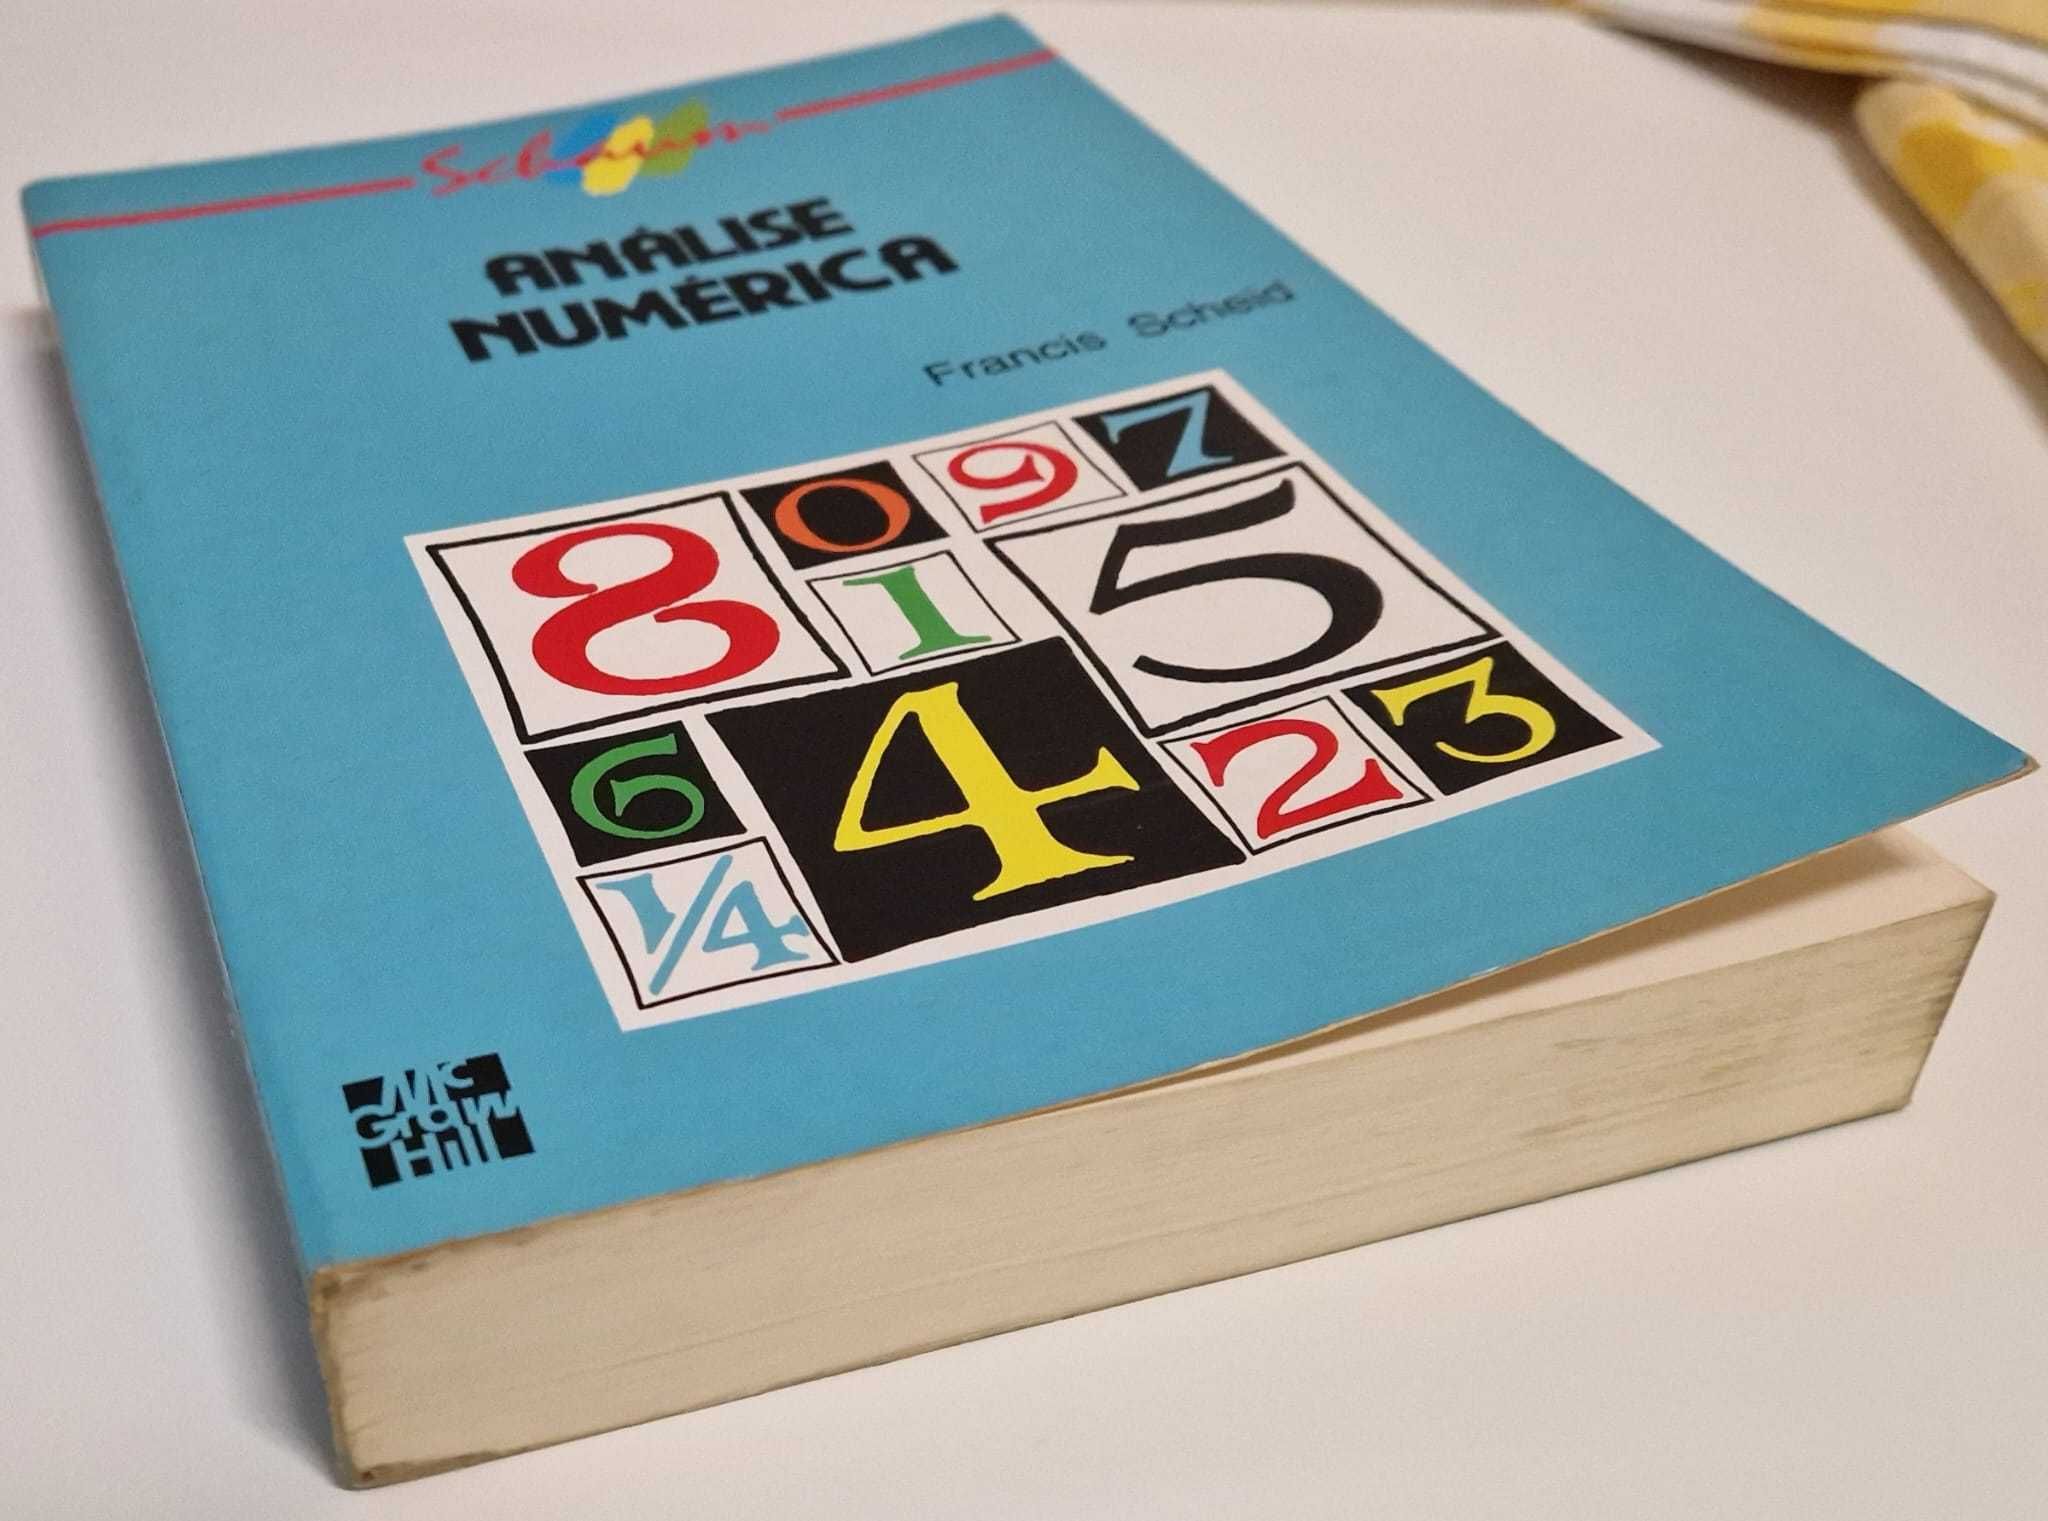 Livro 'Análise Numérica', de Francis Scheid, editora McGraw-Hill